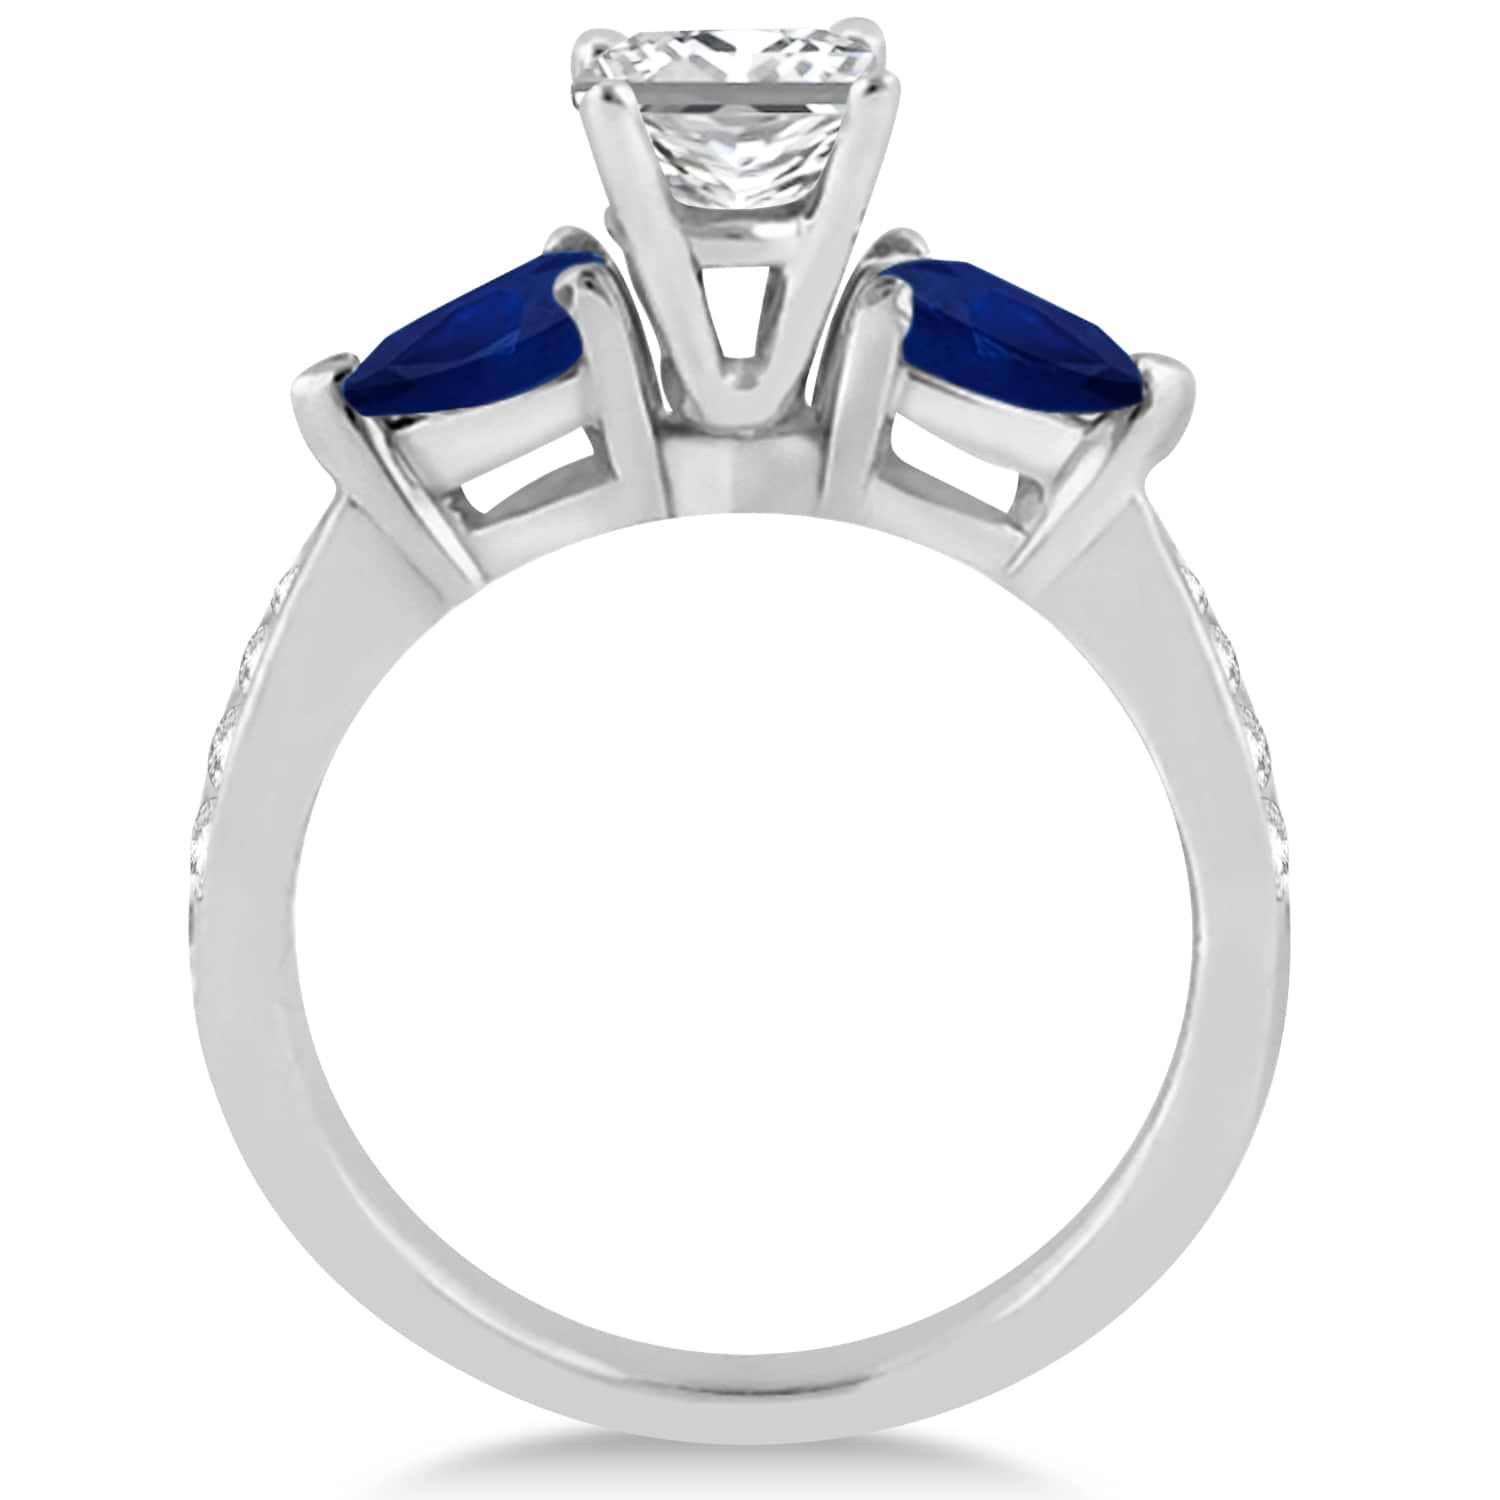 Princess Diamond & Pear Blue Sapphire Engagement Ring 18k White Gold (1.29ct)